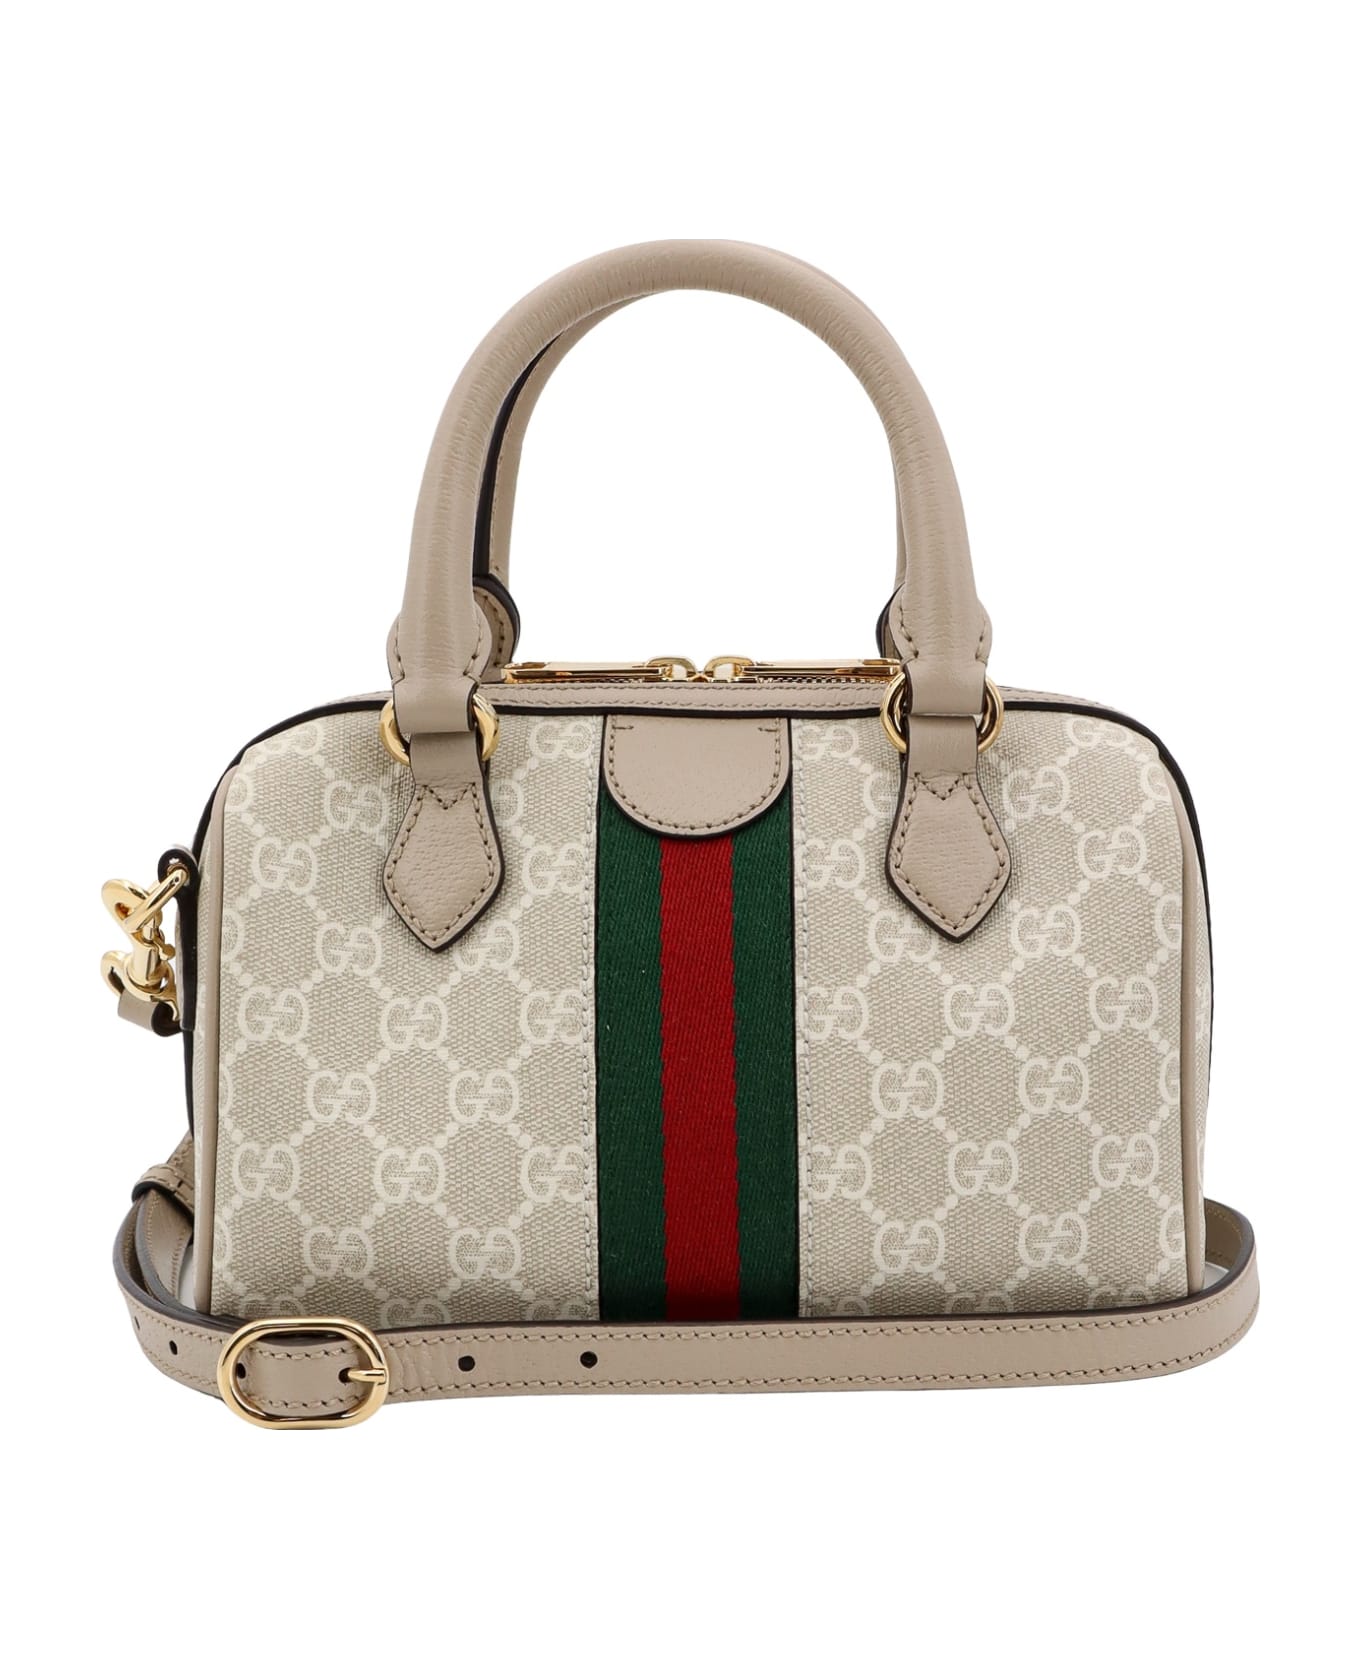 Gucci Ophidia Gg Handbag - Beige